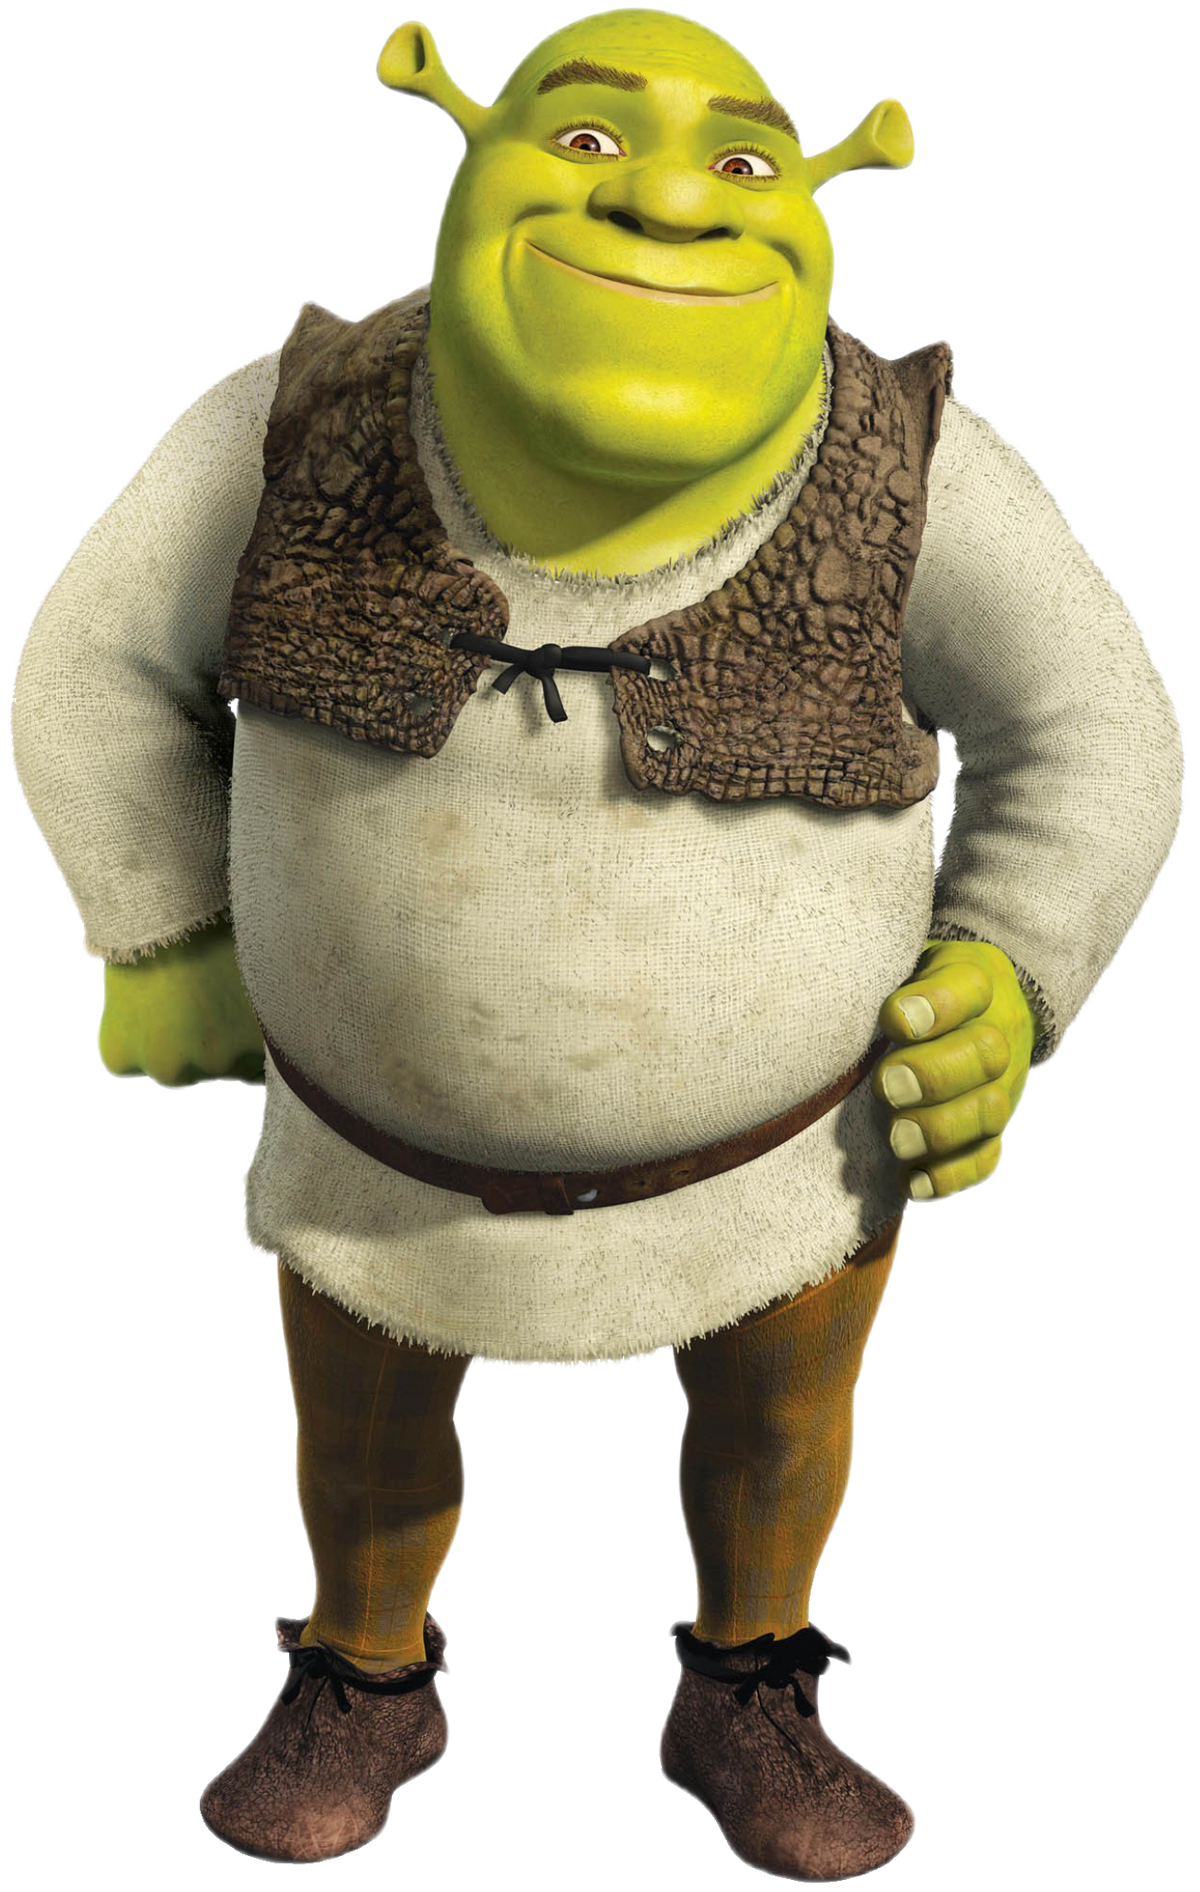 Shrek, Fictional Characters Wiki